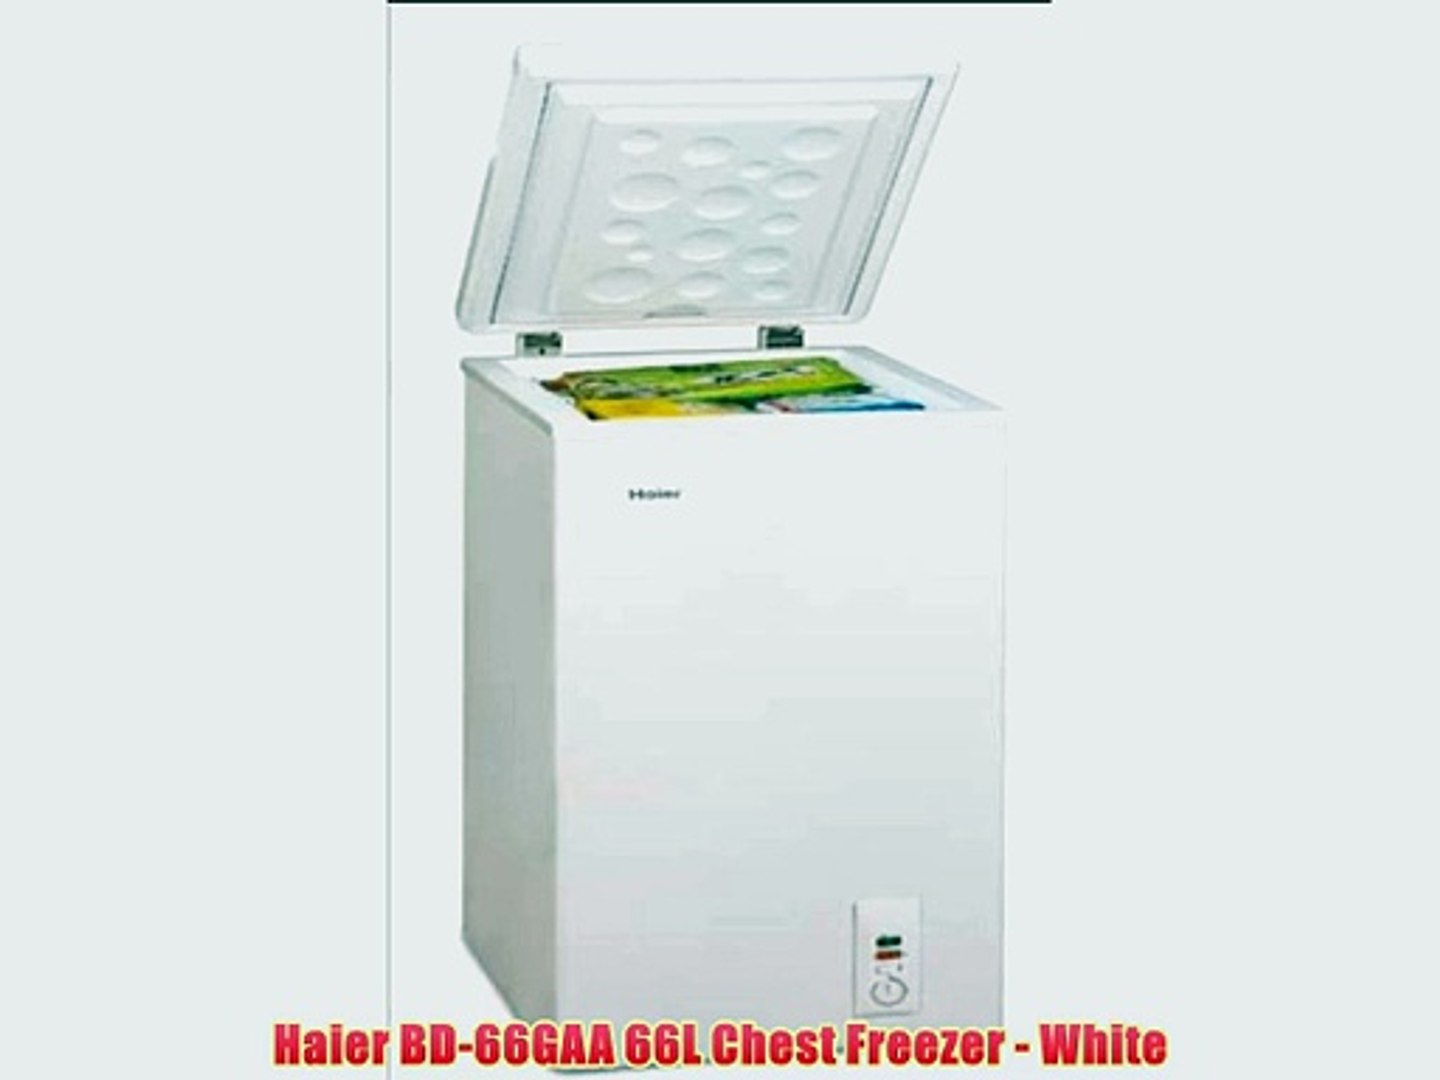 Haier BD-66GAA 66L Chest Freezer - White - video Dailymotion